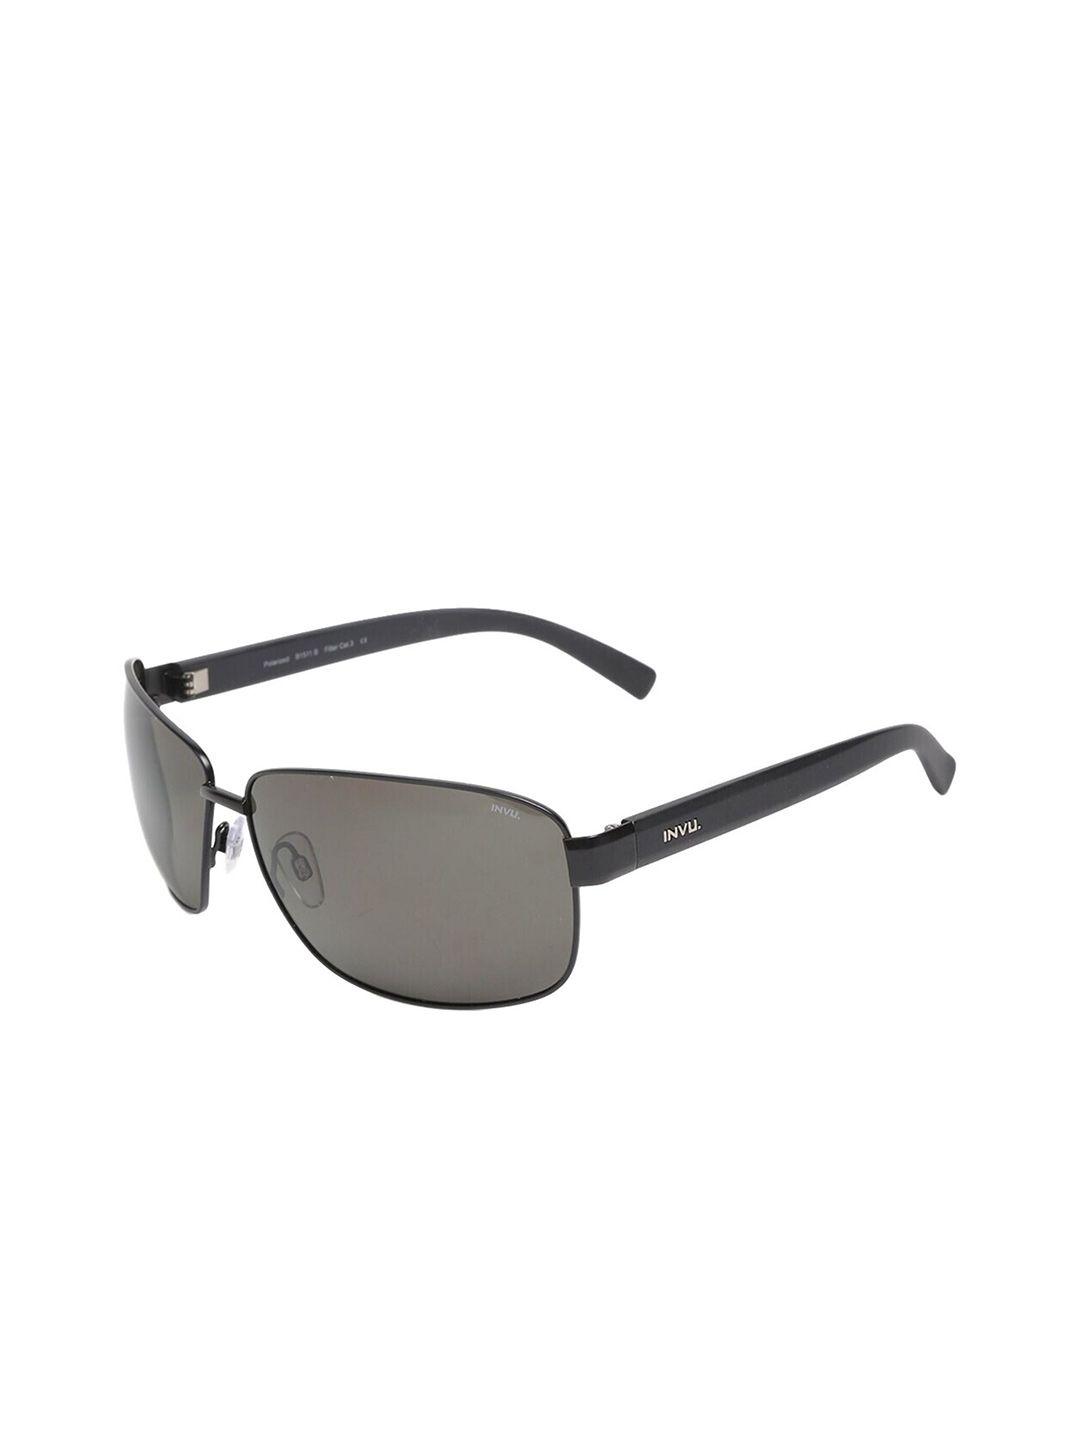 invu unisex rectangle sunglasses with uv protected lens b1511b